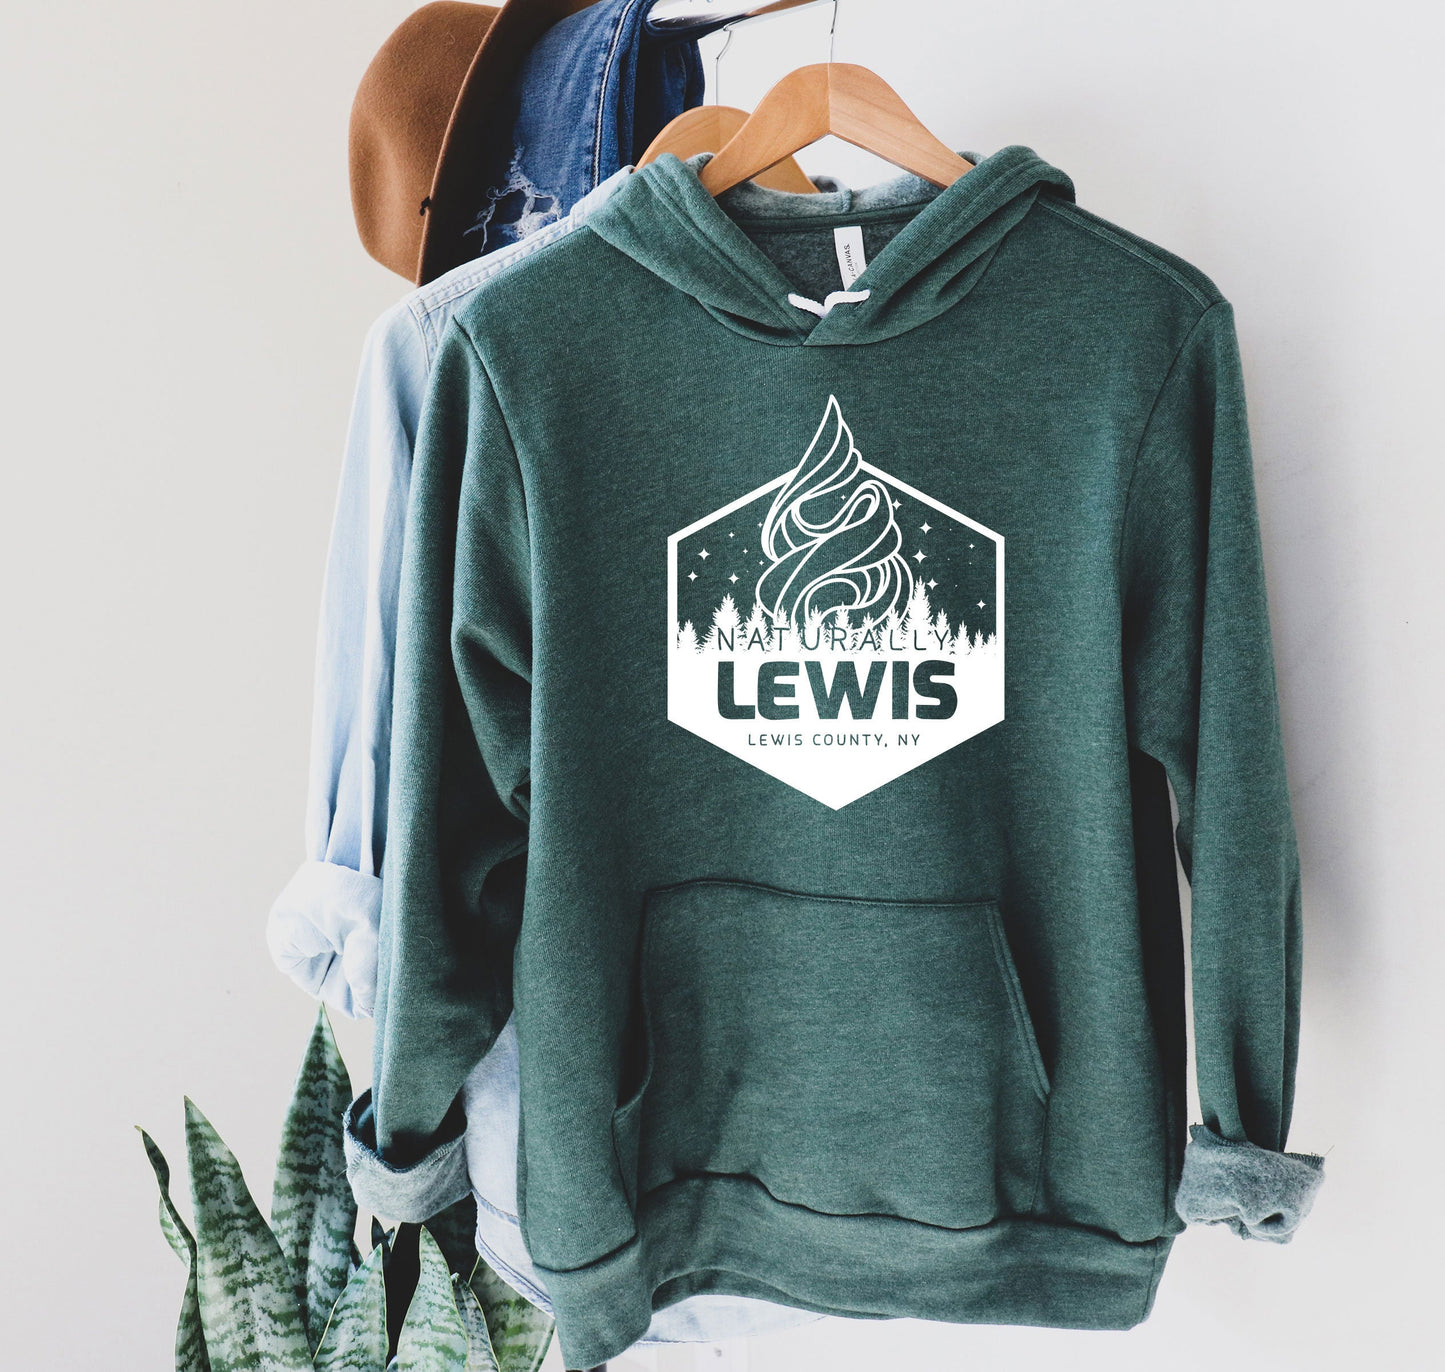 Naturally Lewis Gear - Hooded Sweatshirt on Super Soft Bella Canvas